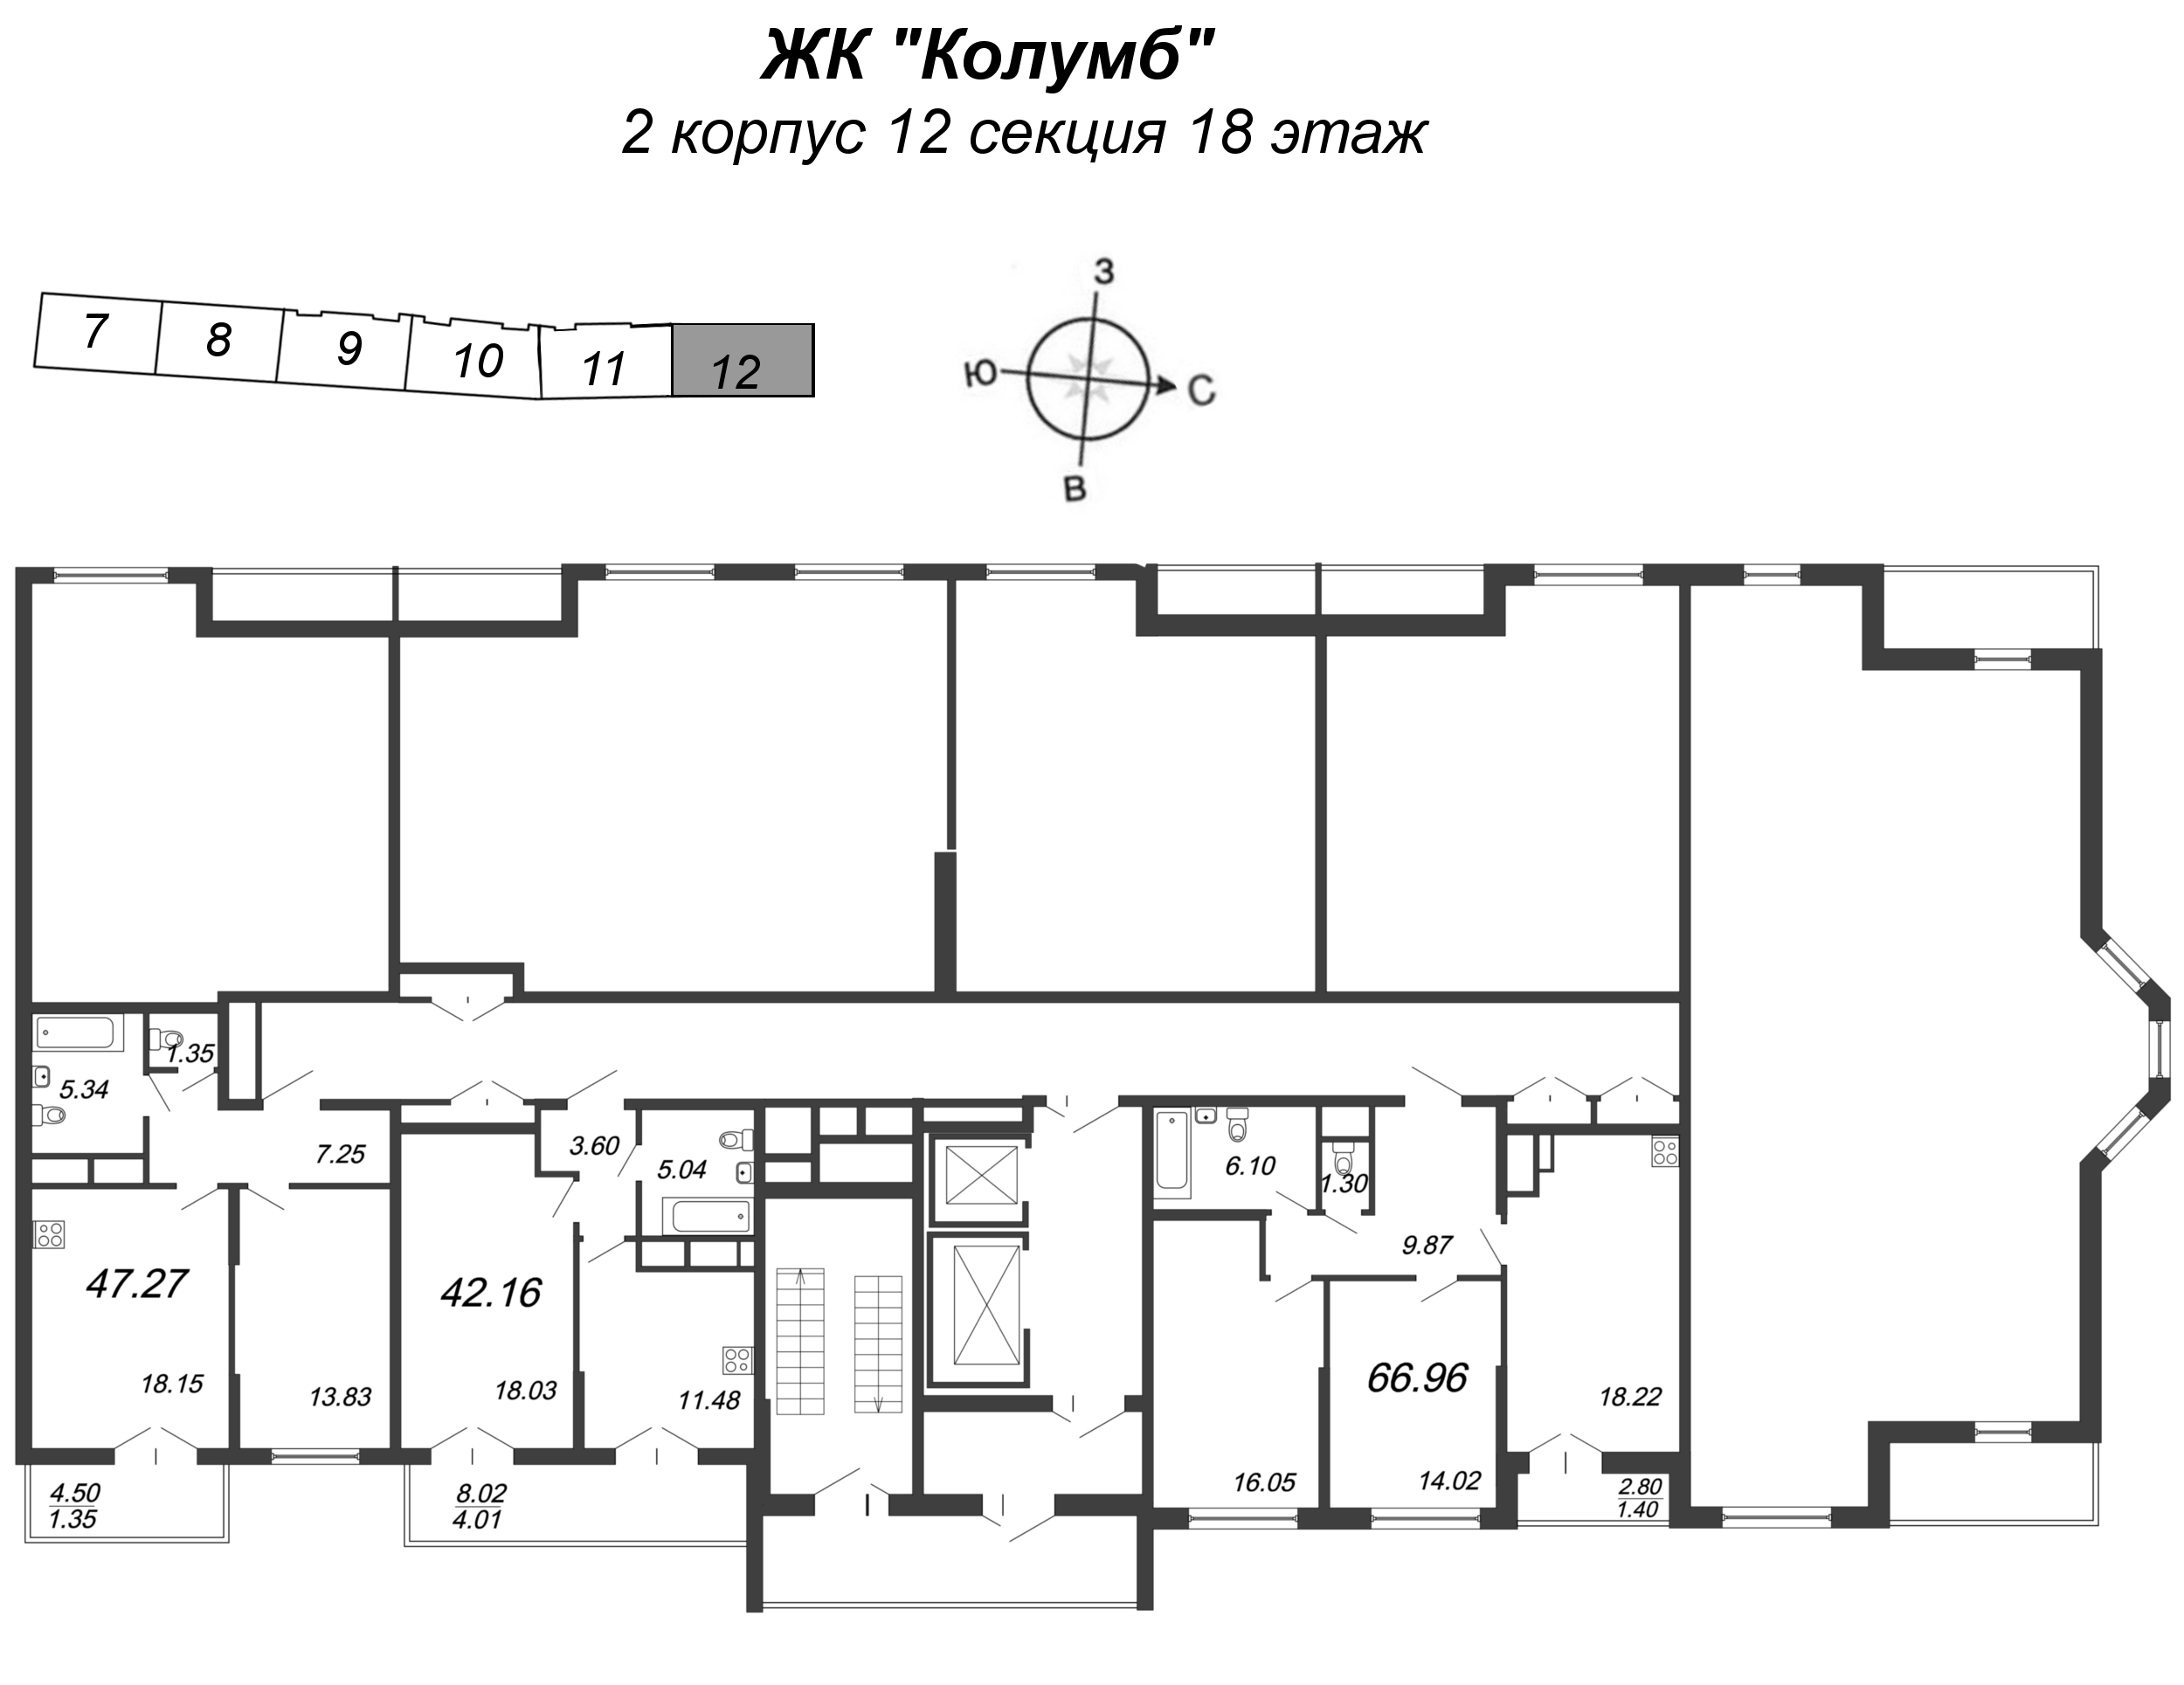 2-комнатная (Евро) квартира, 47.27 м² - планировка этажа